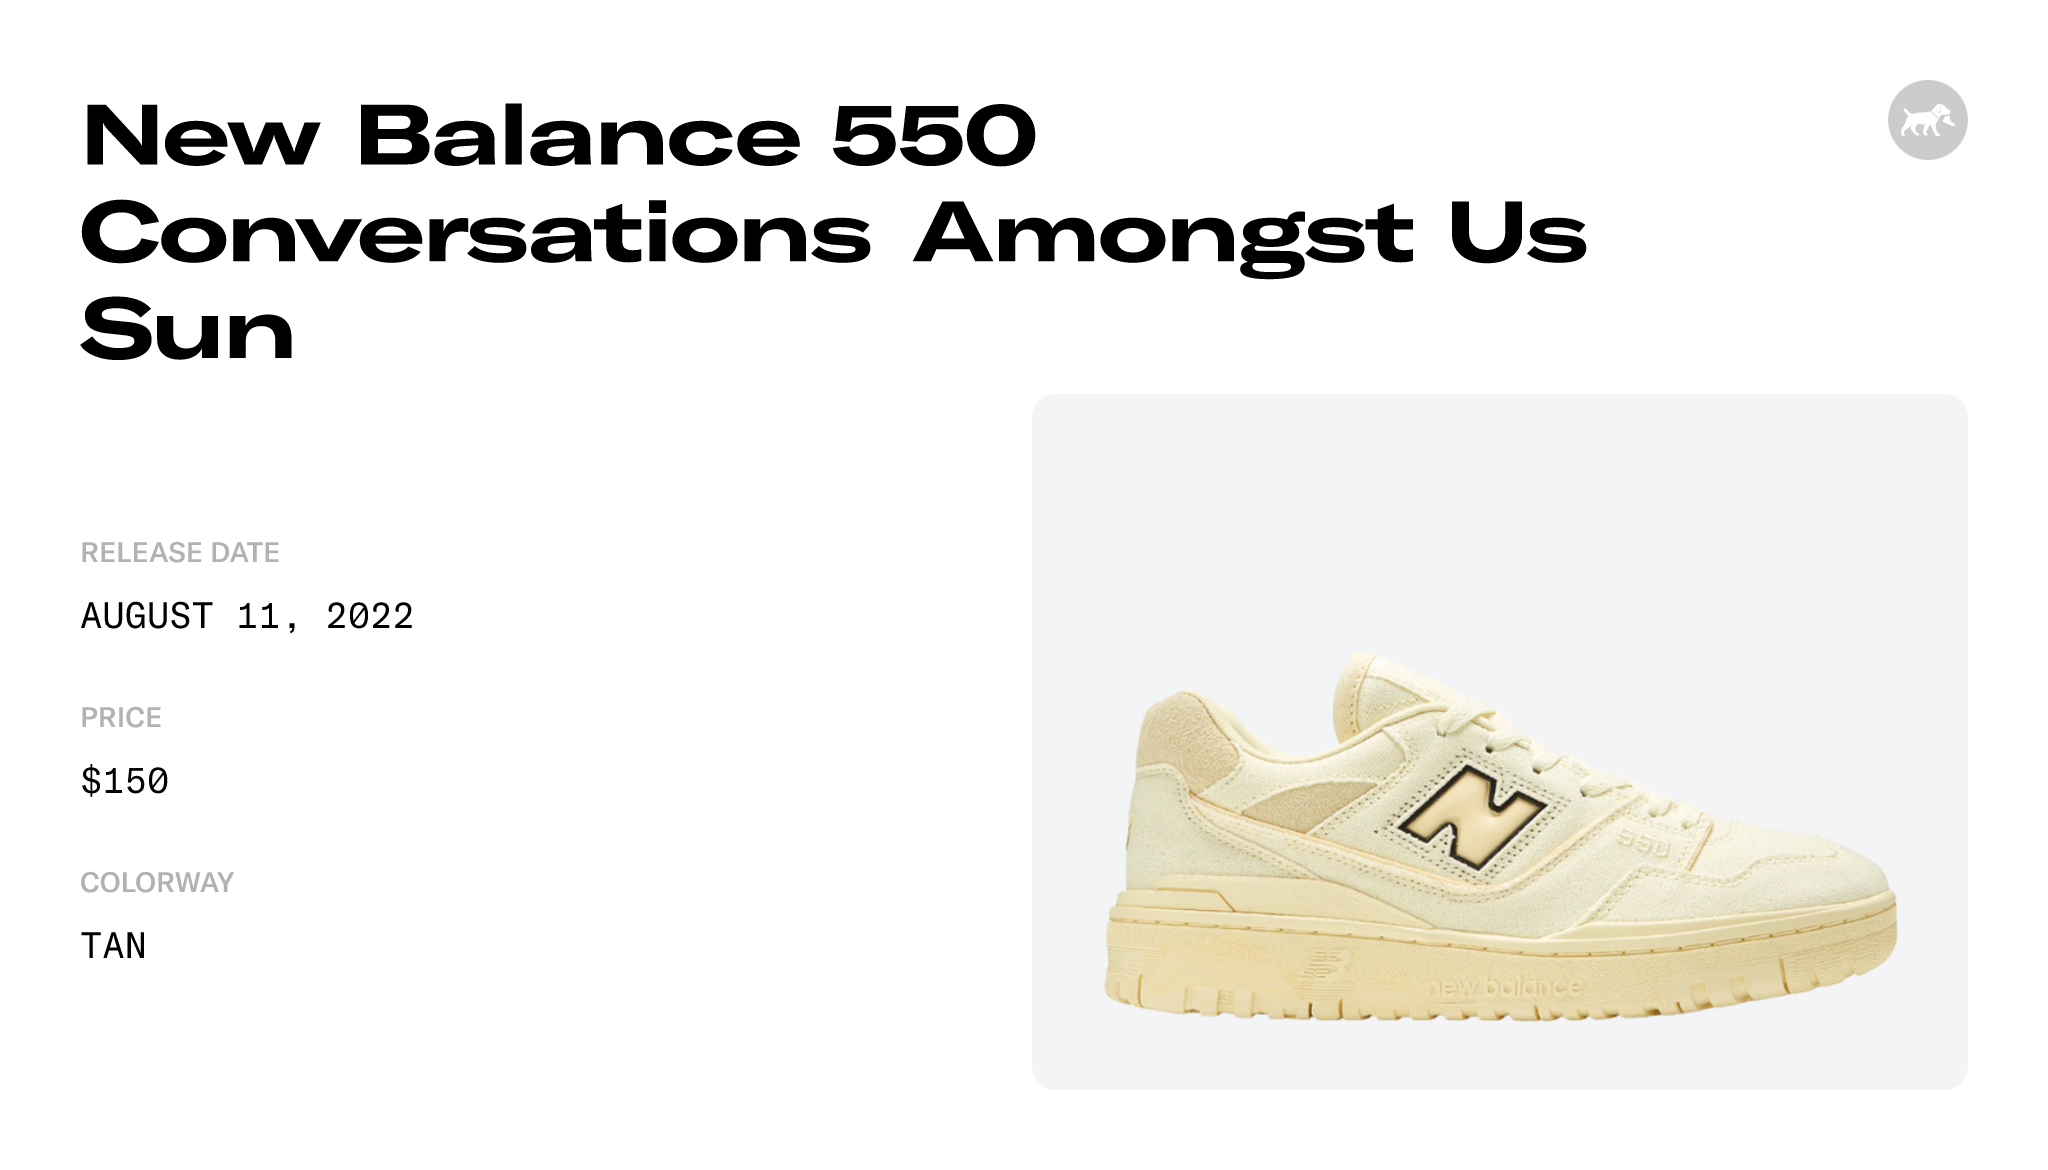 New Balance 550 Conversations Amongst Us Release Date